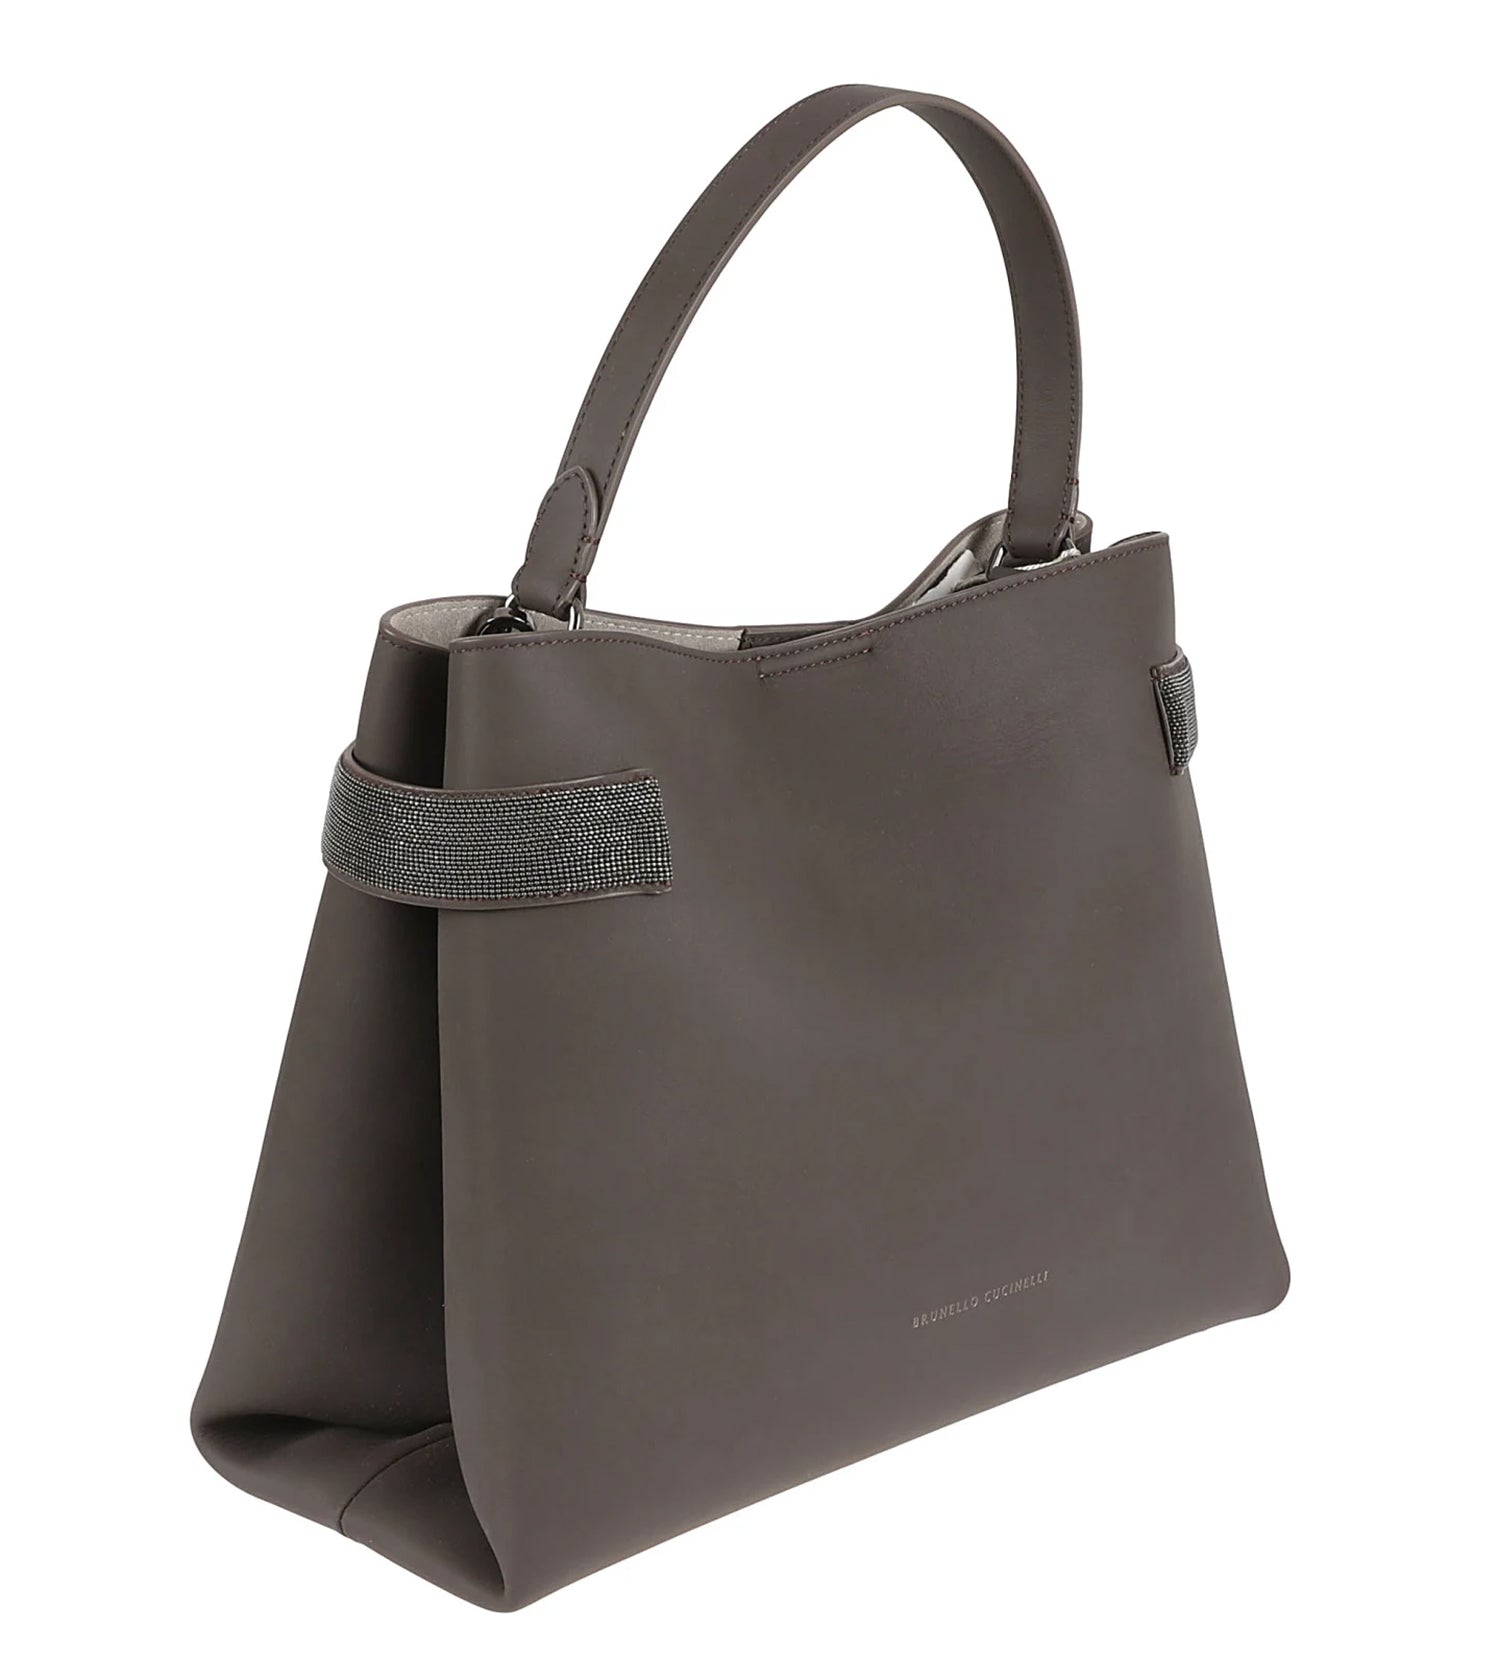 BRUNELLO CUCINELLI Suede Compact Leather Shoulder Bag